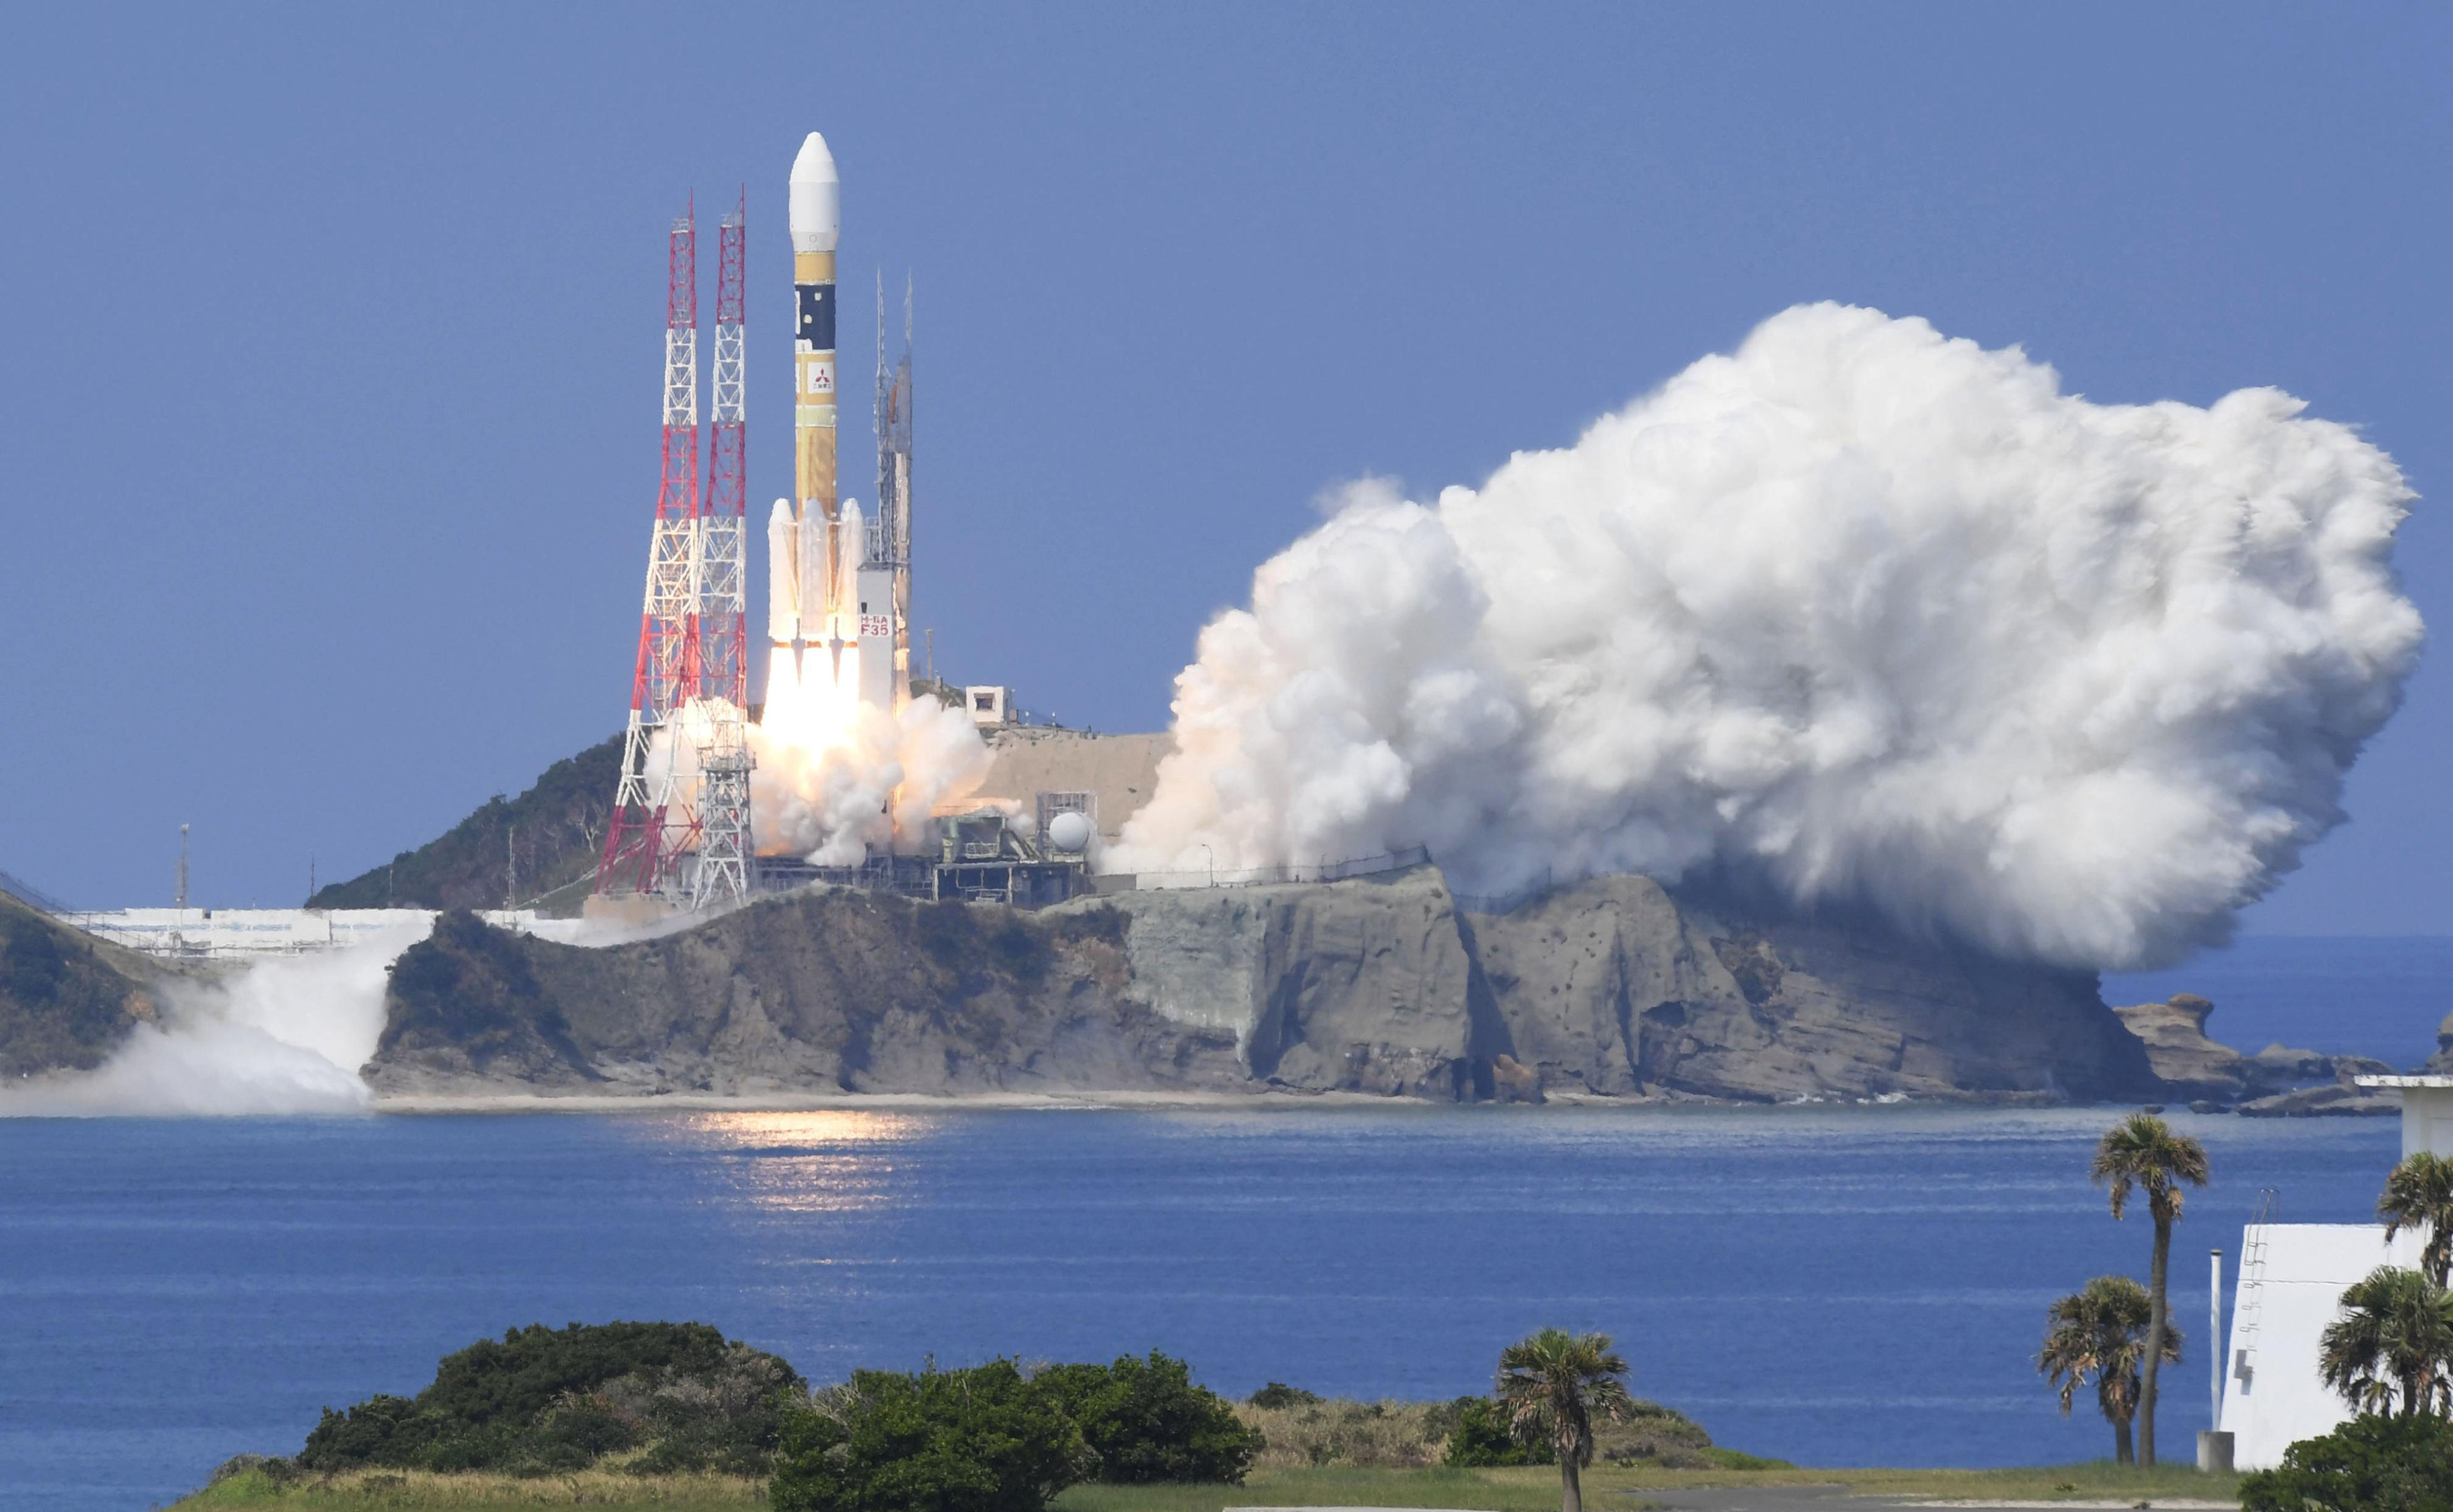 A H-IIA rocket carrying Michibiki 3 satellite lifts off from the launching pad at Tanegashima Space Center on the southwestern island of Tanegashima